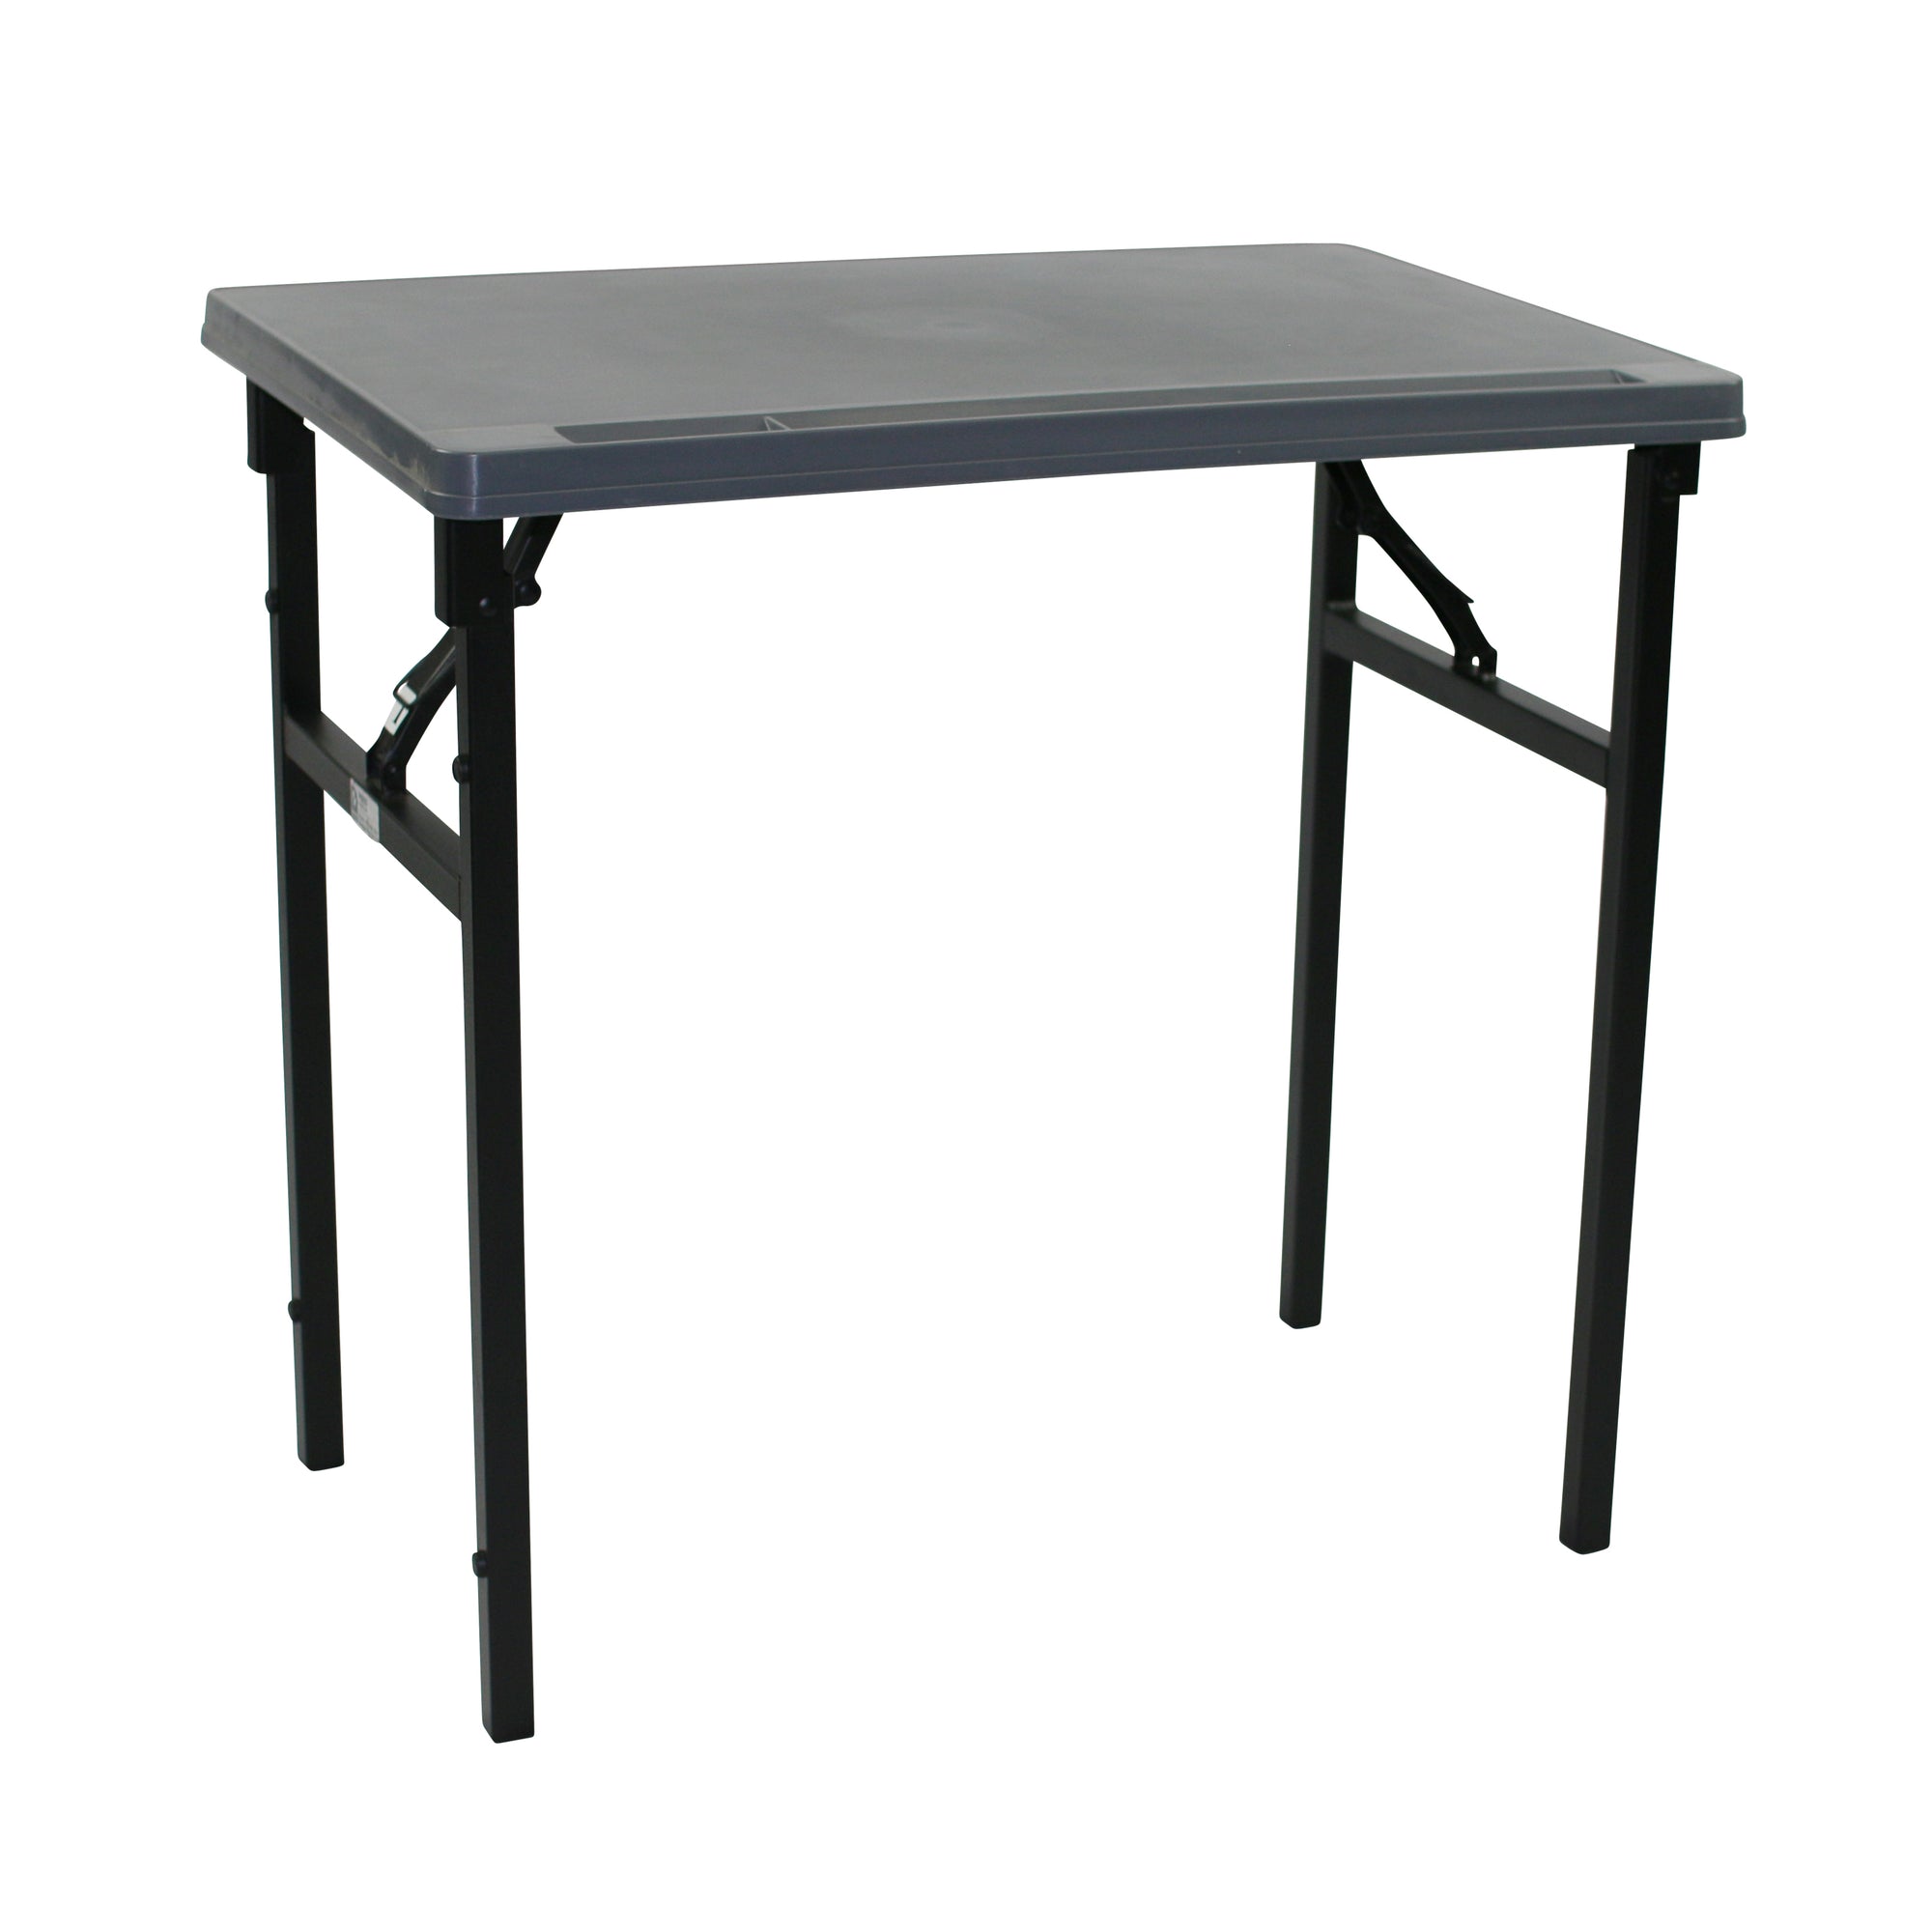 Lachlan folding utility table